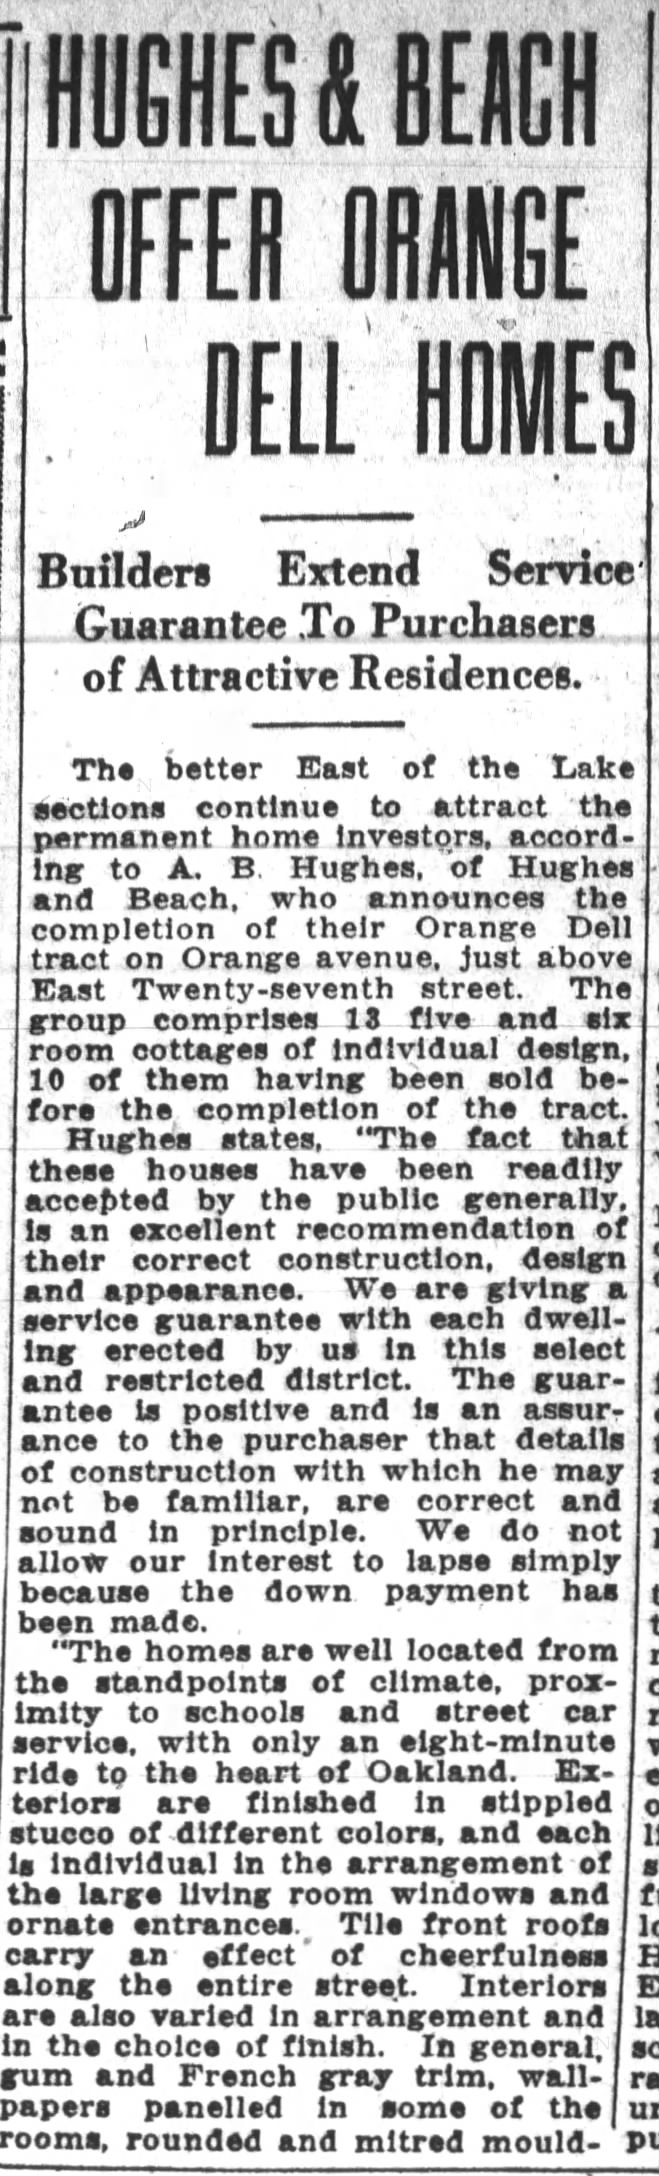 Hughes & Beach offer Orange Dell Homes Feb 25, 1926